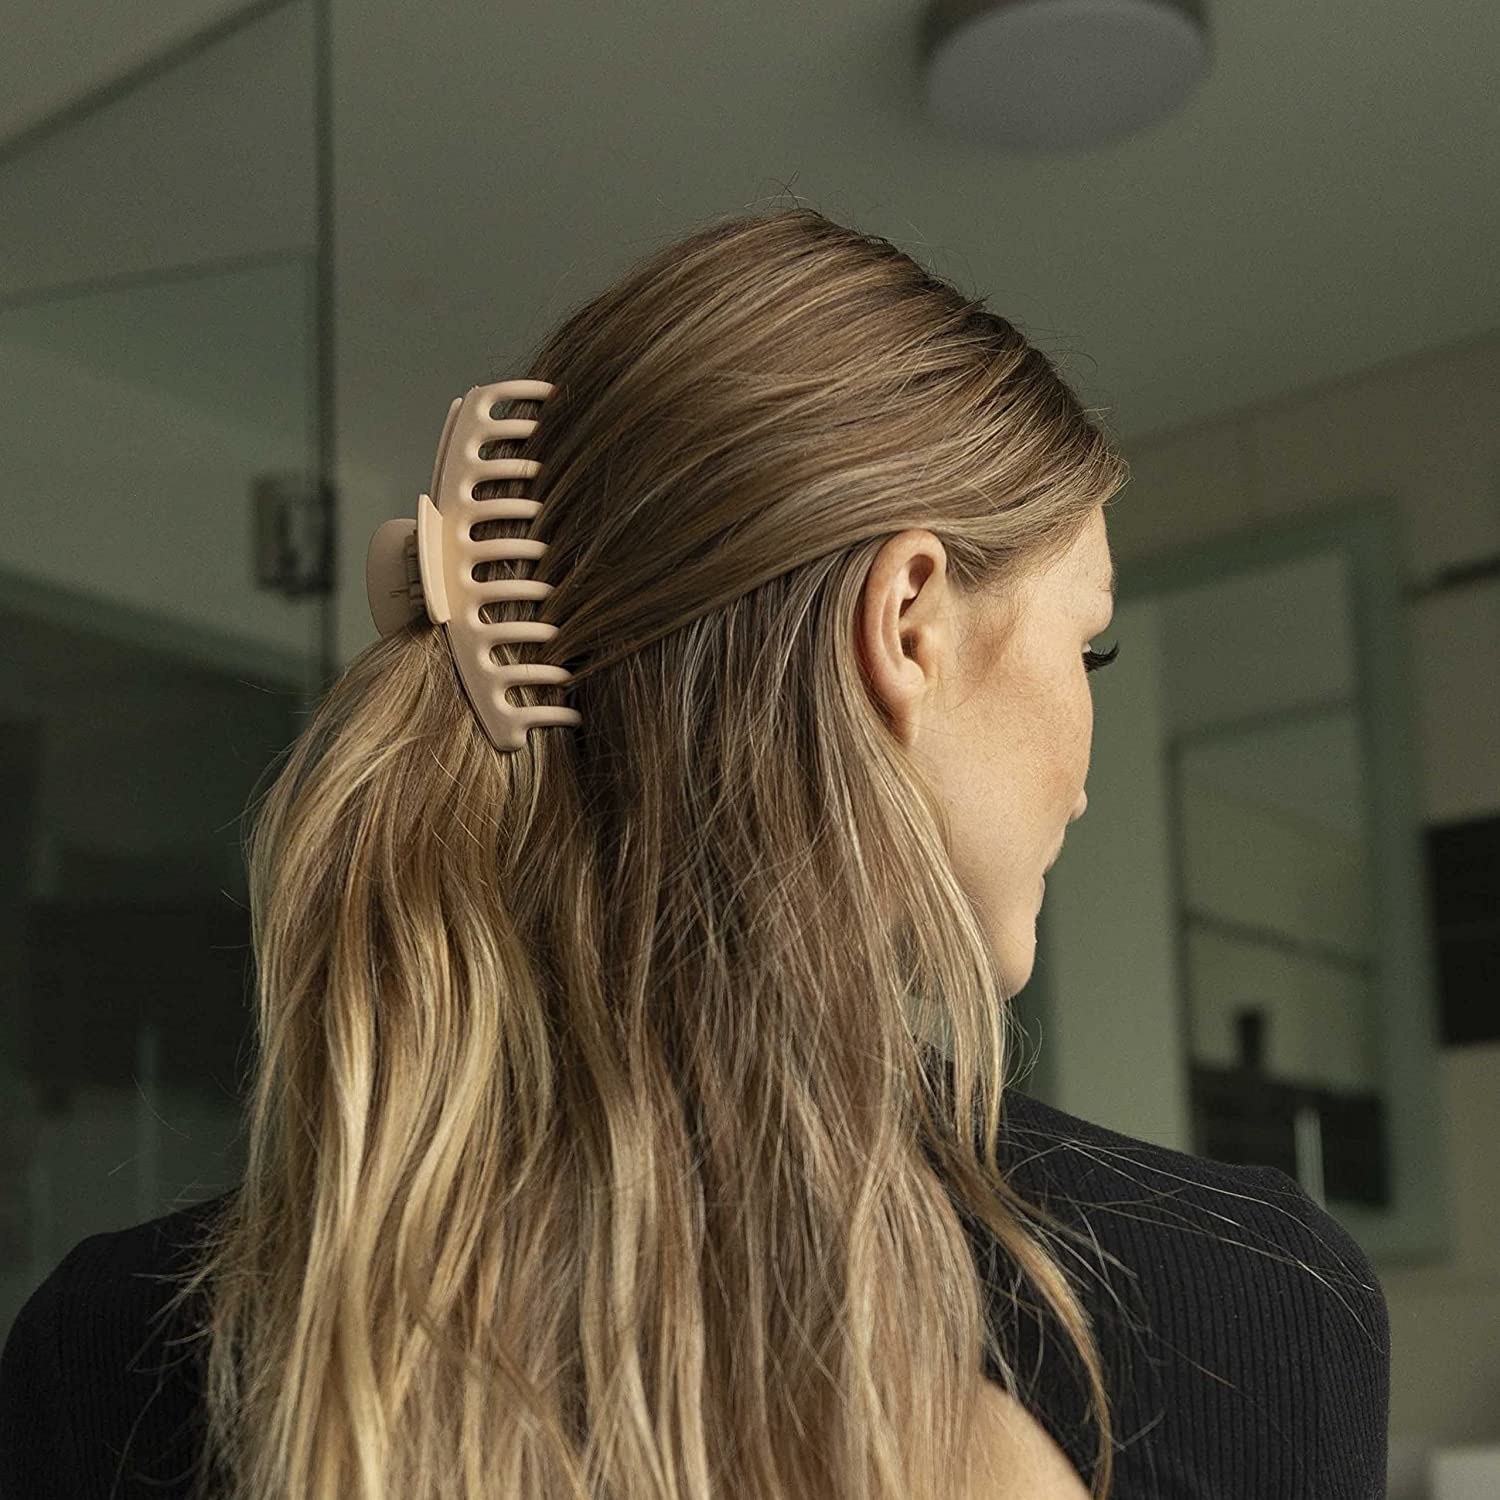 A person wearing a clip in their hair